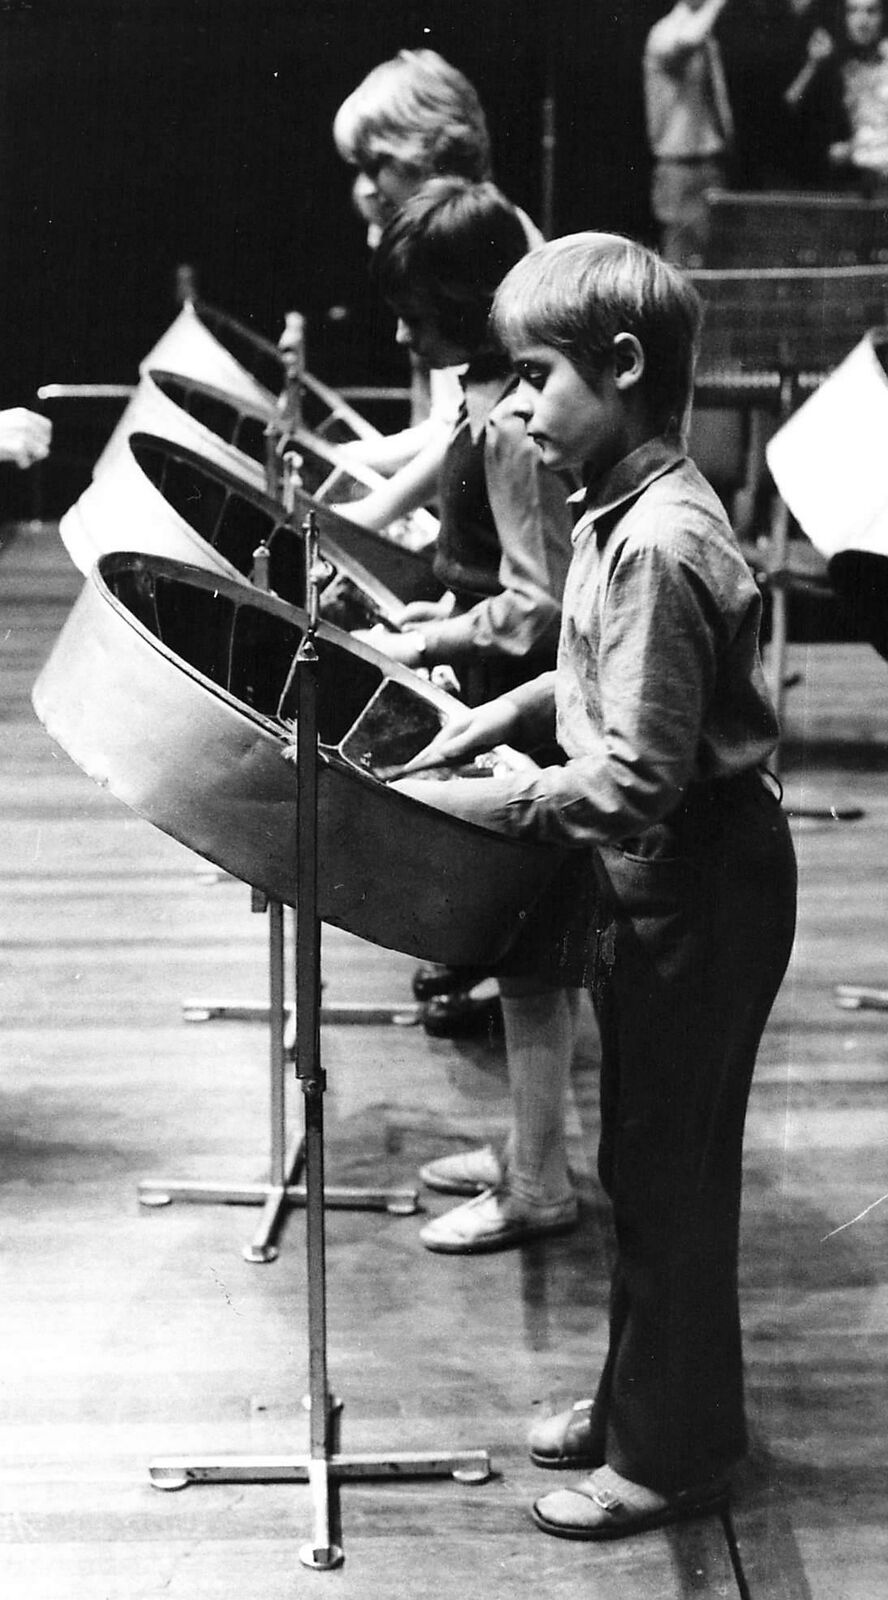 1975 Press Photo Boy Ping Pong Drums SCHOOLS PROM Concert Royal Albert Hall kg